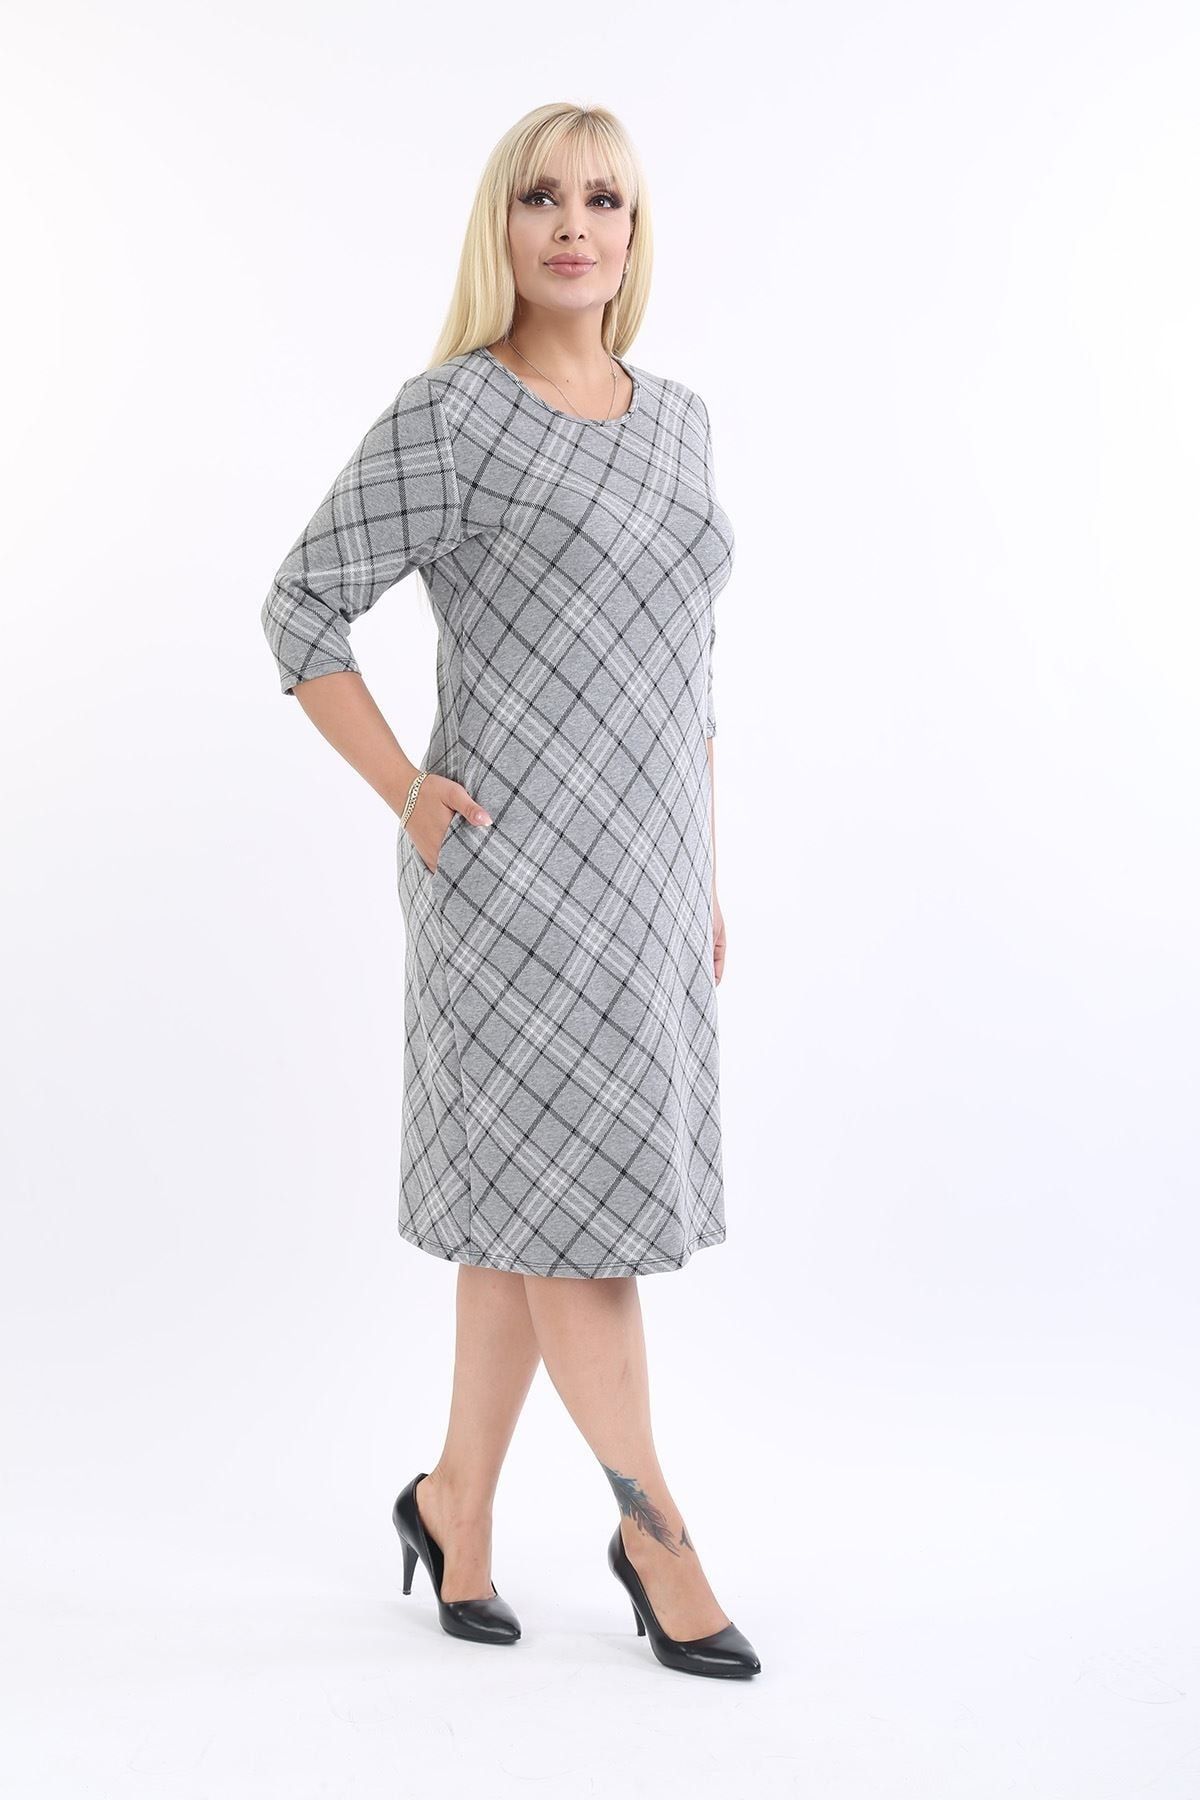 FARBAPLUS Jacquard Pocketed Winter Plus Size Dress 30a-2173 - Trendyol